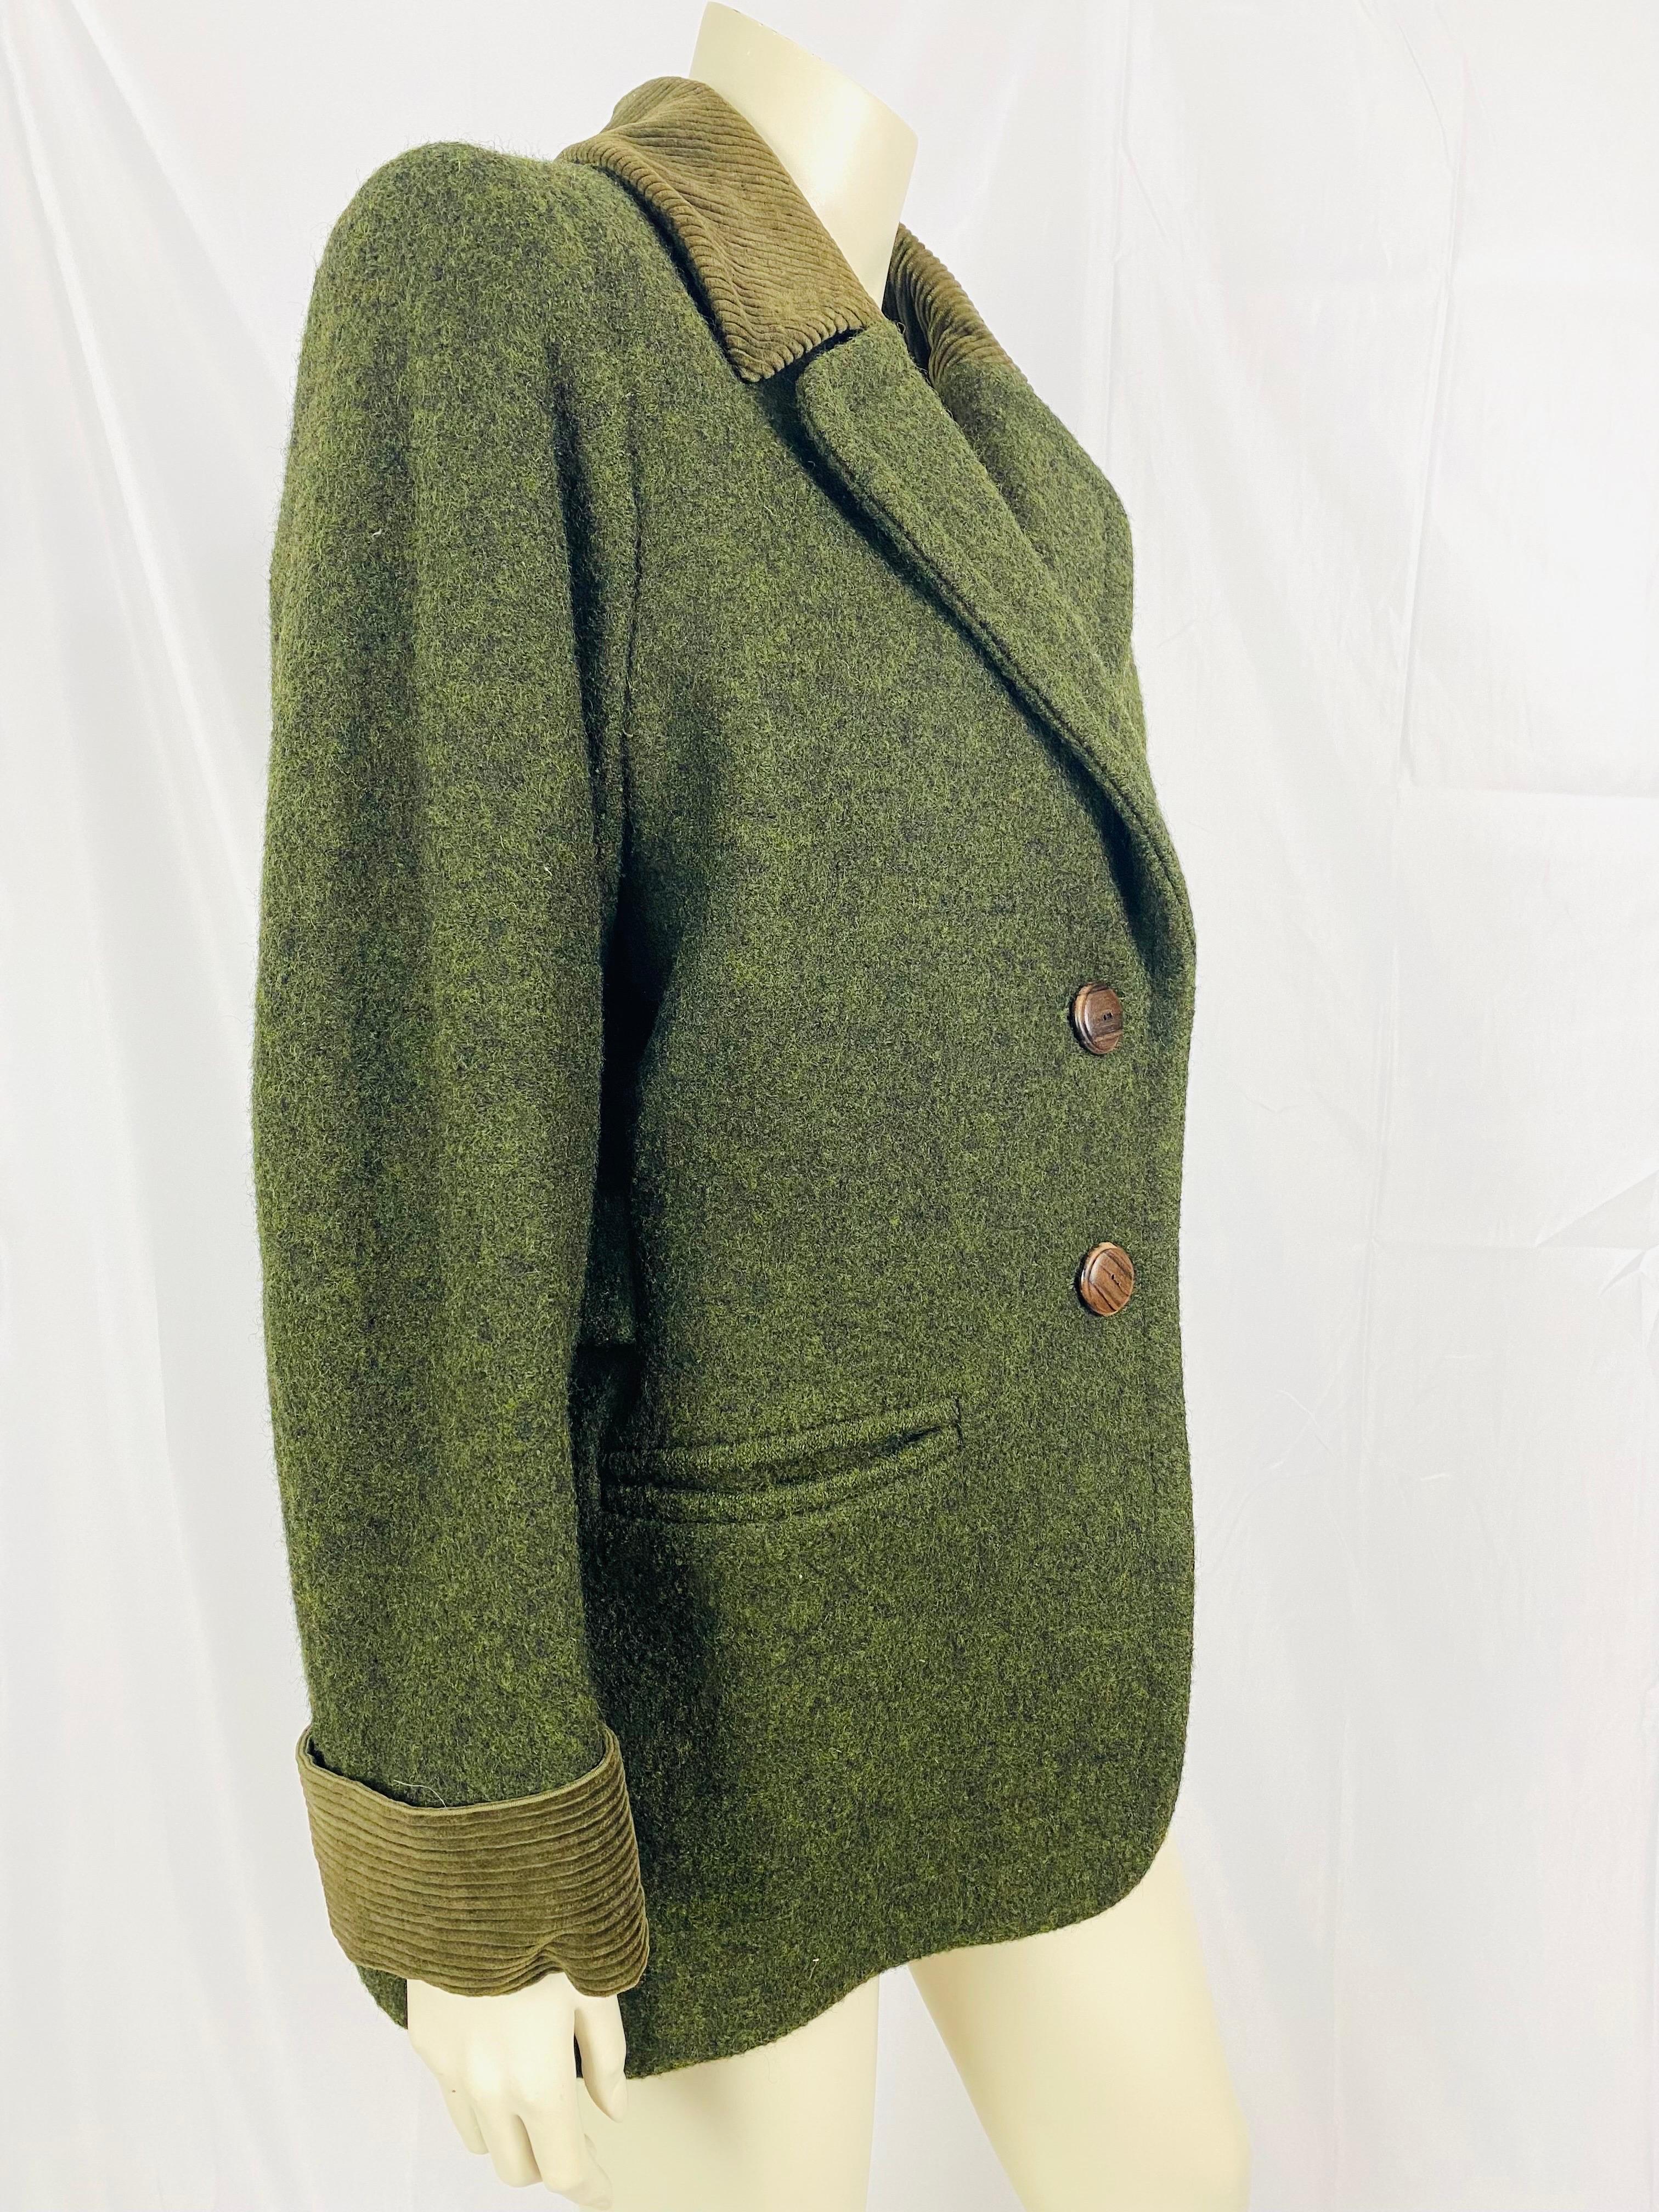 Superb vintage Yves saint laurent winter jacket circa 1970, in khaki boiled wool 2